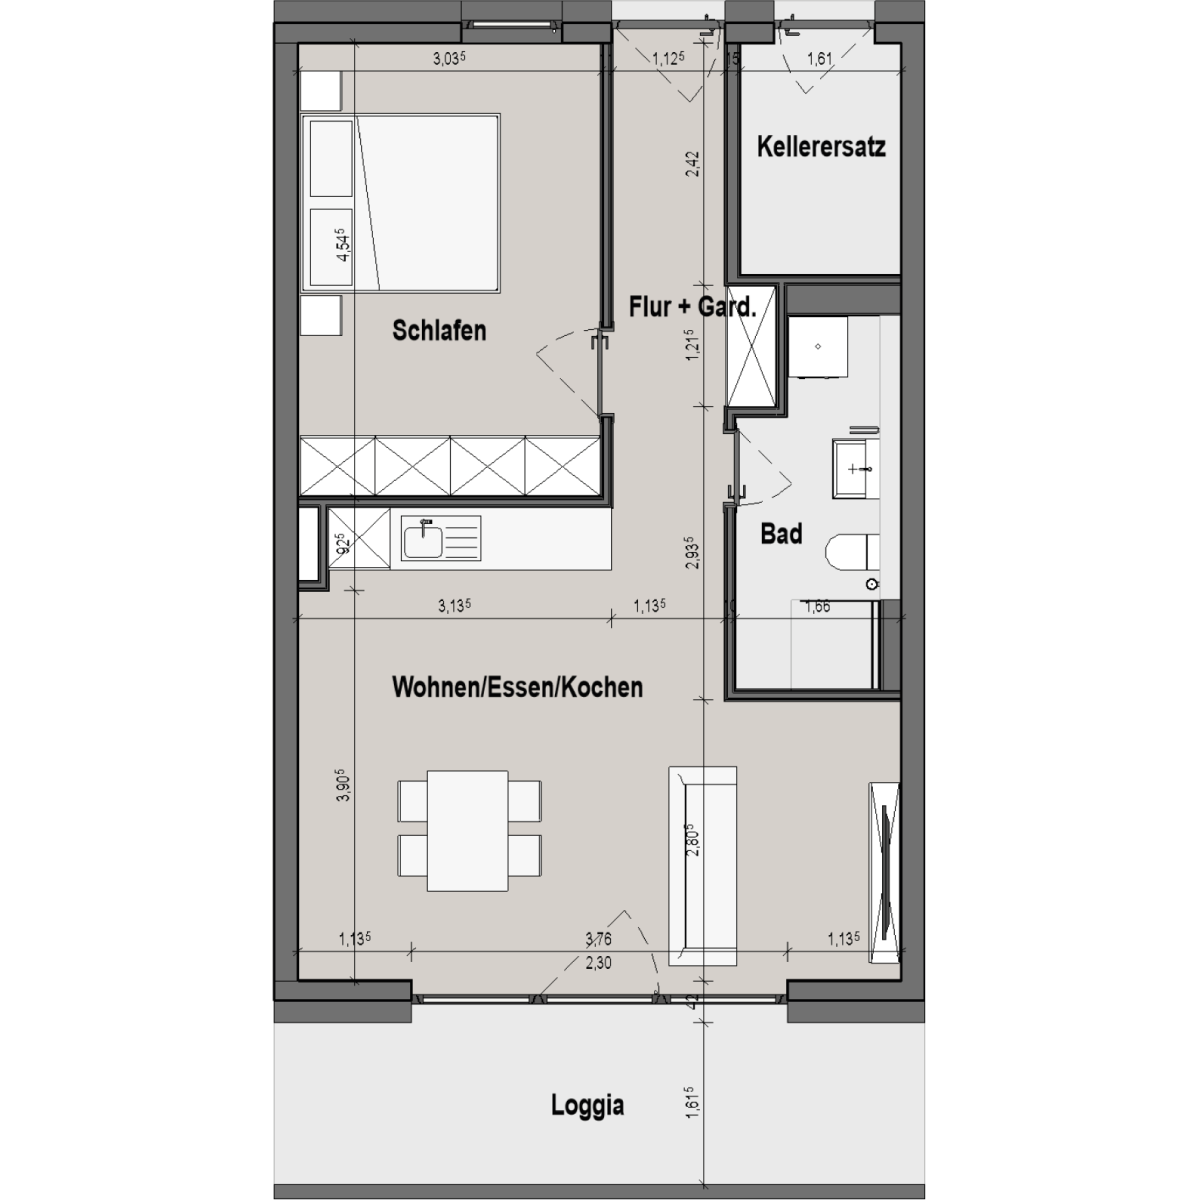 2-Raum-Wohnung Muster